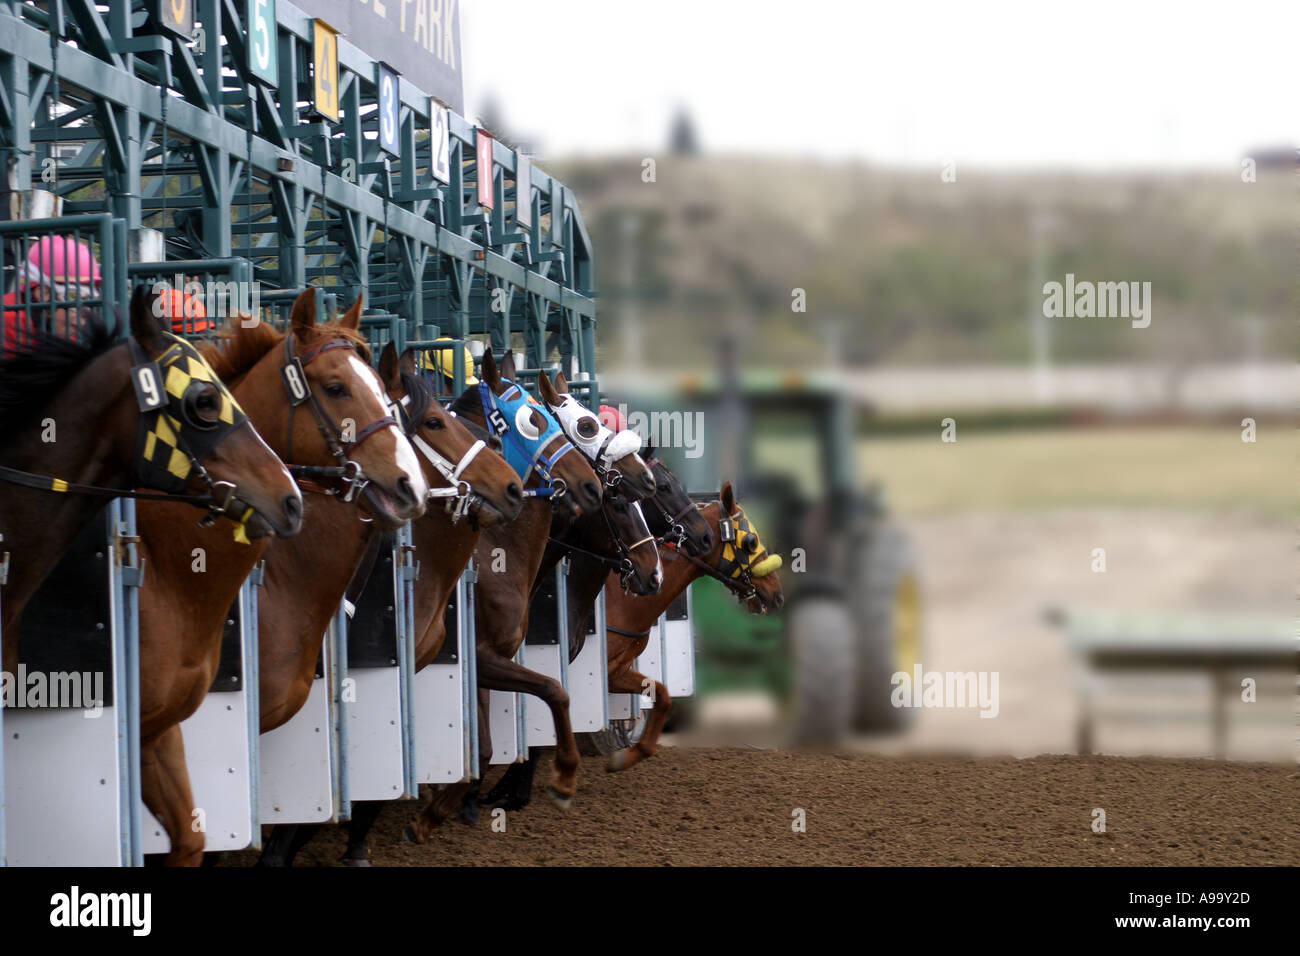 HORSES THOROUGHBRED RACING Calgary Alberta Canada Stock Photo